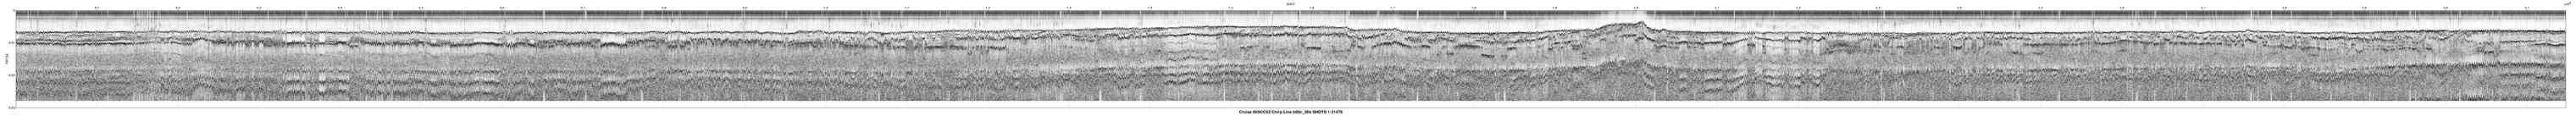 00SCC02 b00c_38b seismic profile image